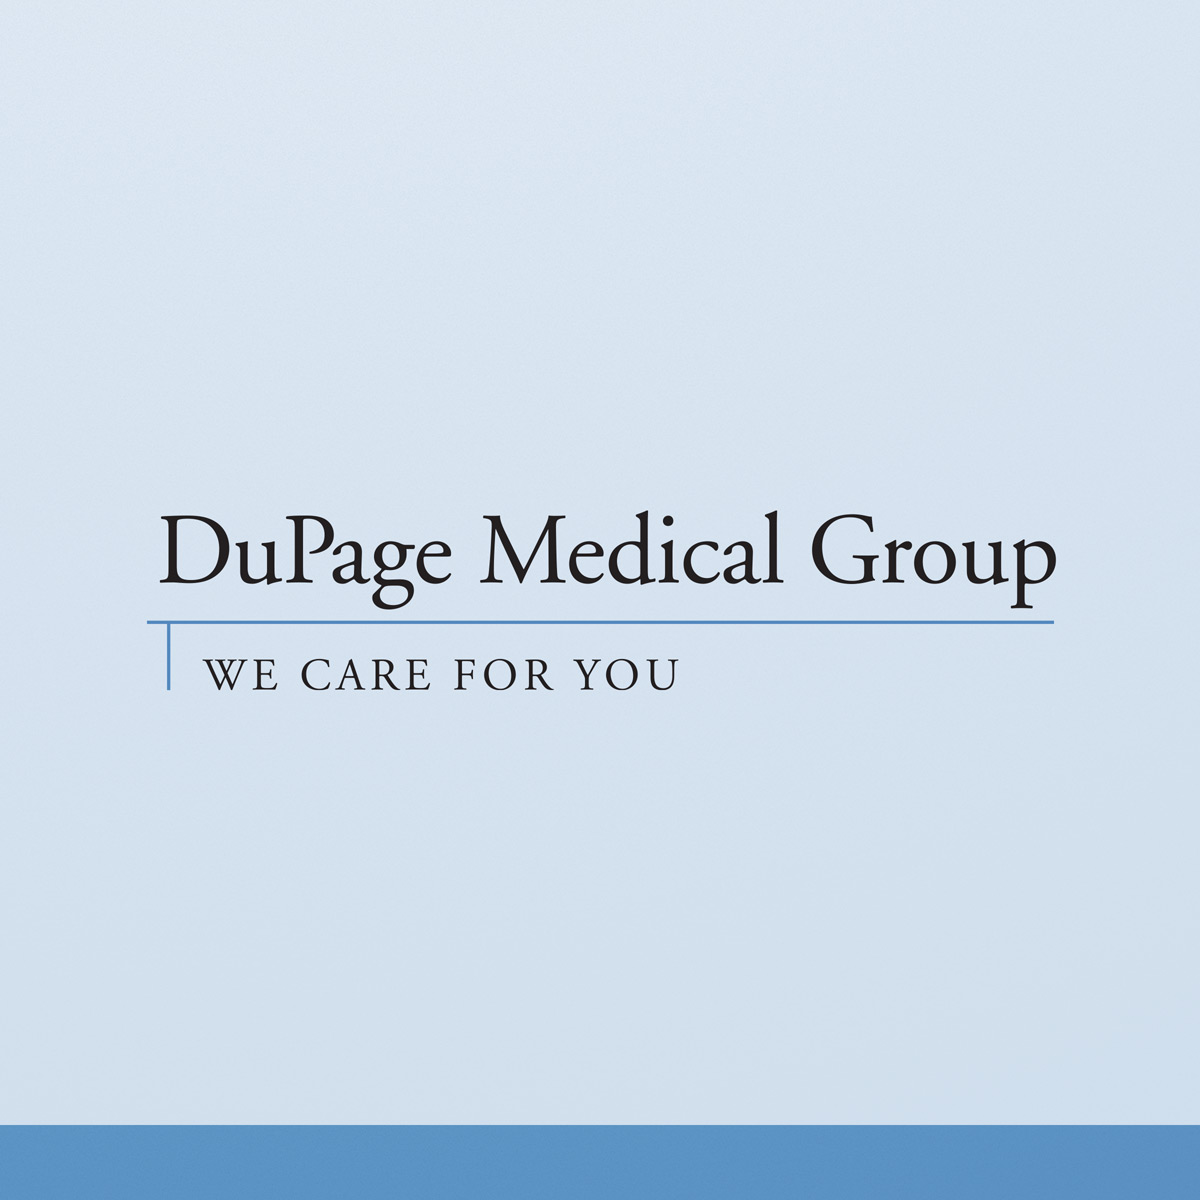 DuPage Medical Group Branding